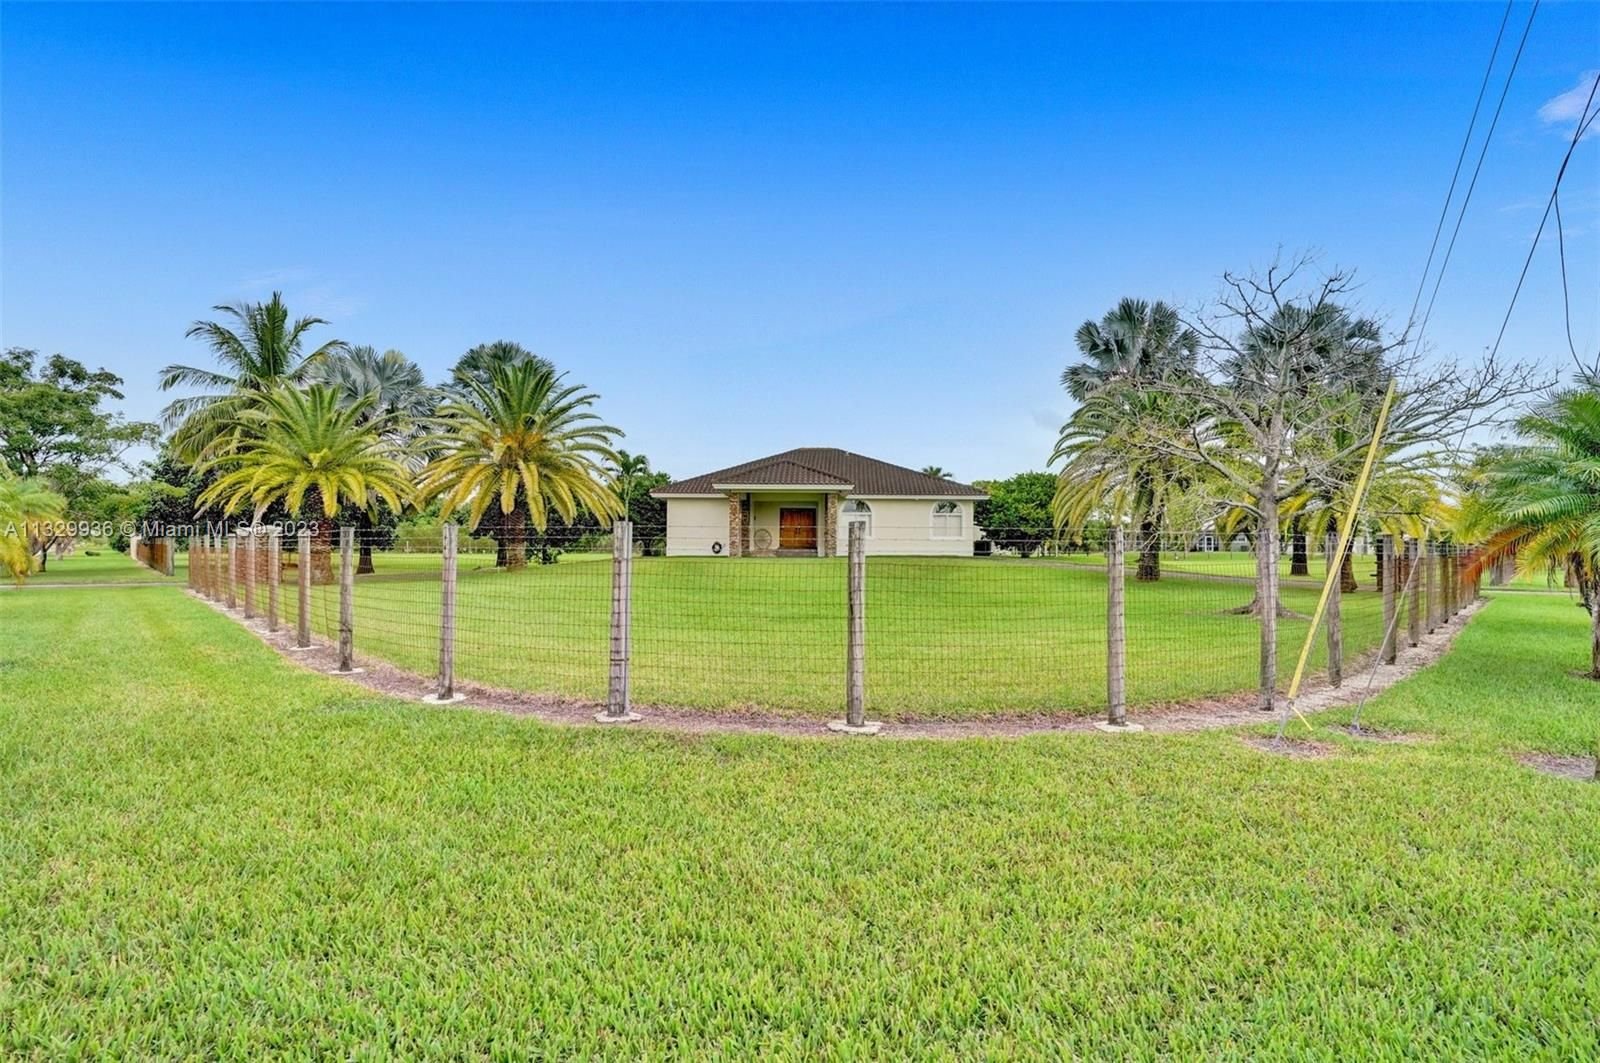 Real estate property located at 20625 198th St, Miami-Dade County, Miami, FL